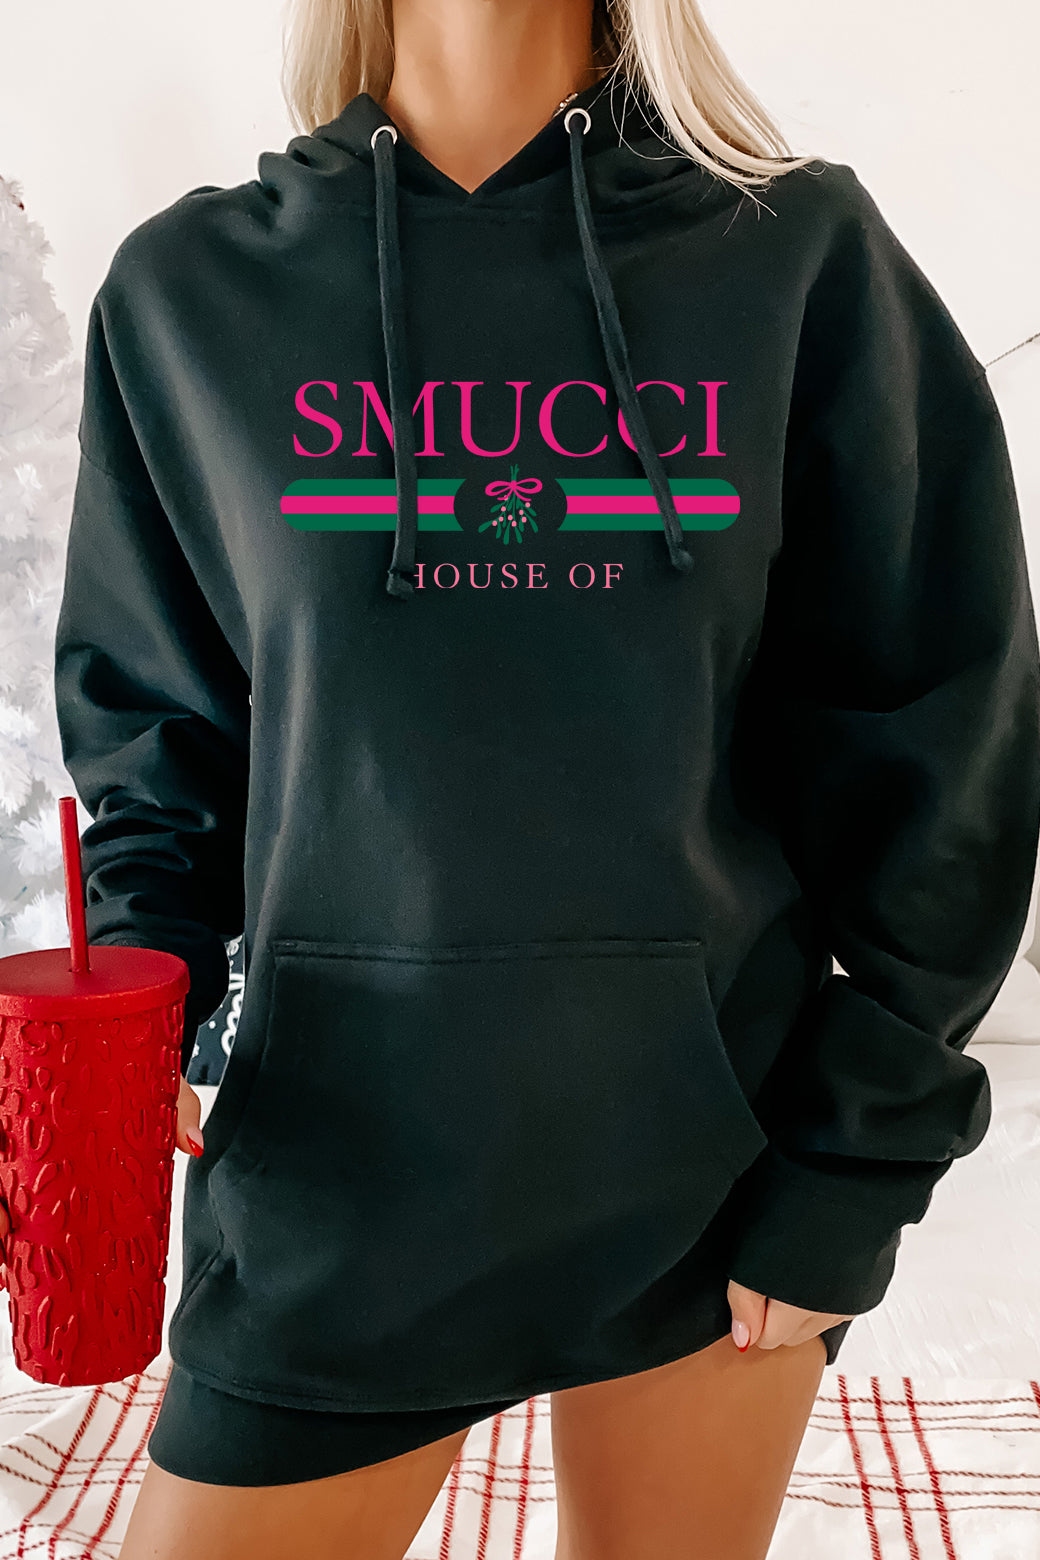 "House Of Smucci" Parody Graphic Multiple Shirt Option (Black) - Print On Demand - NanaMacs